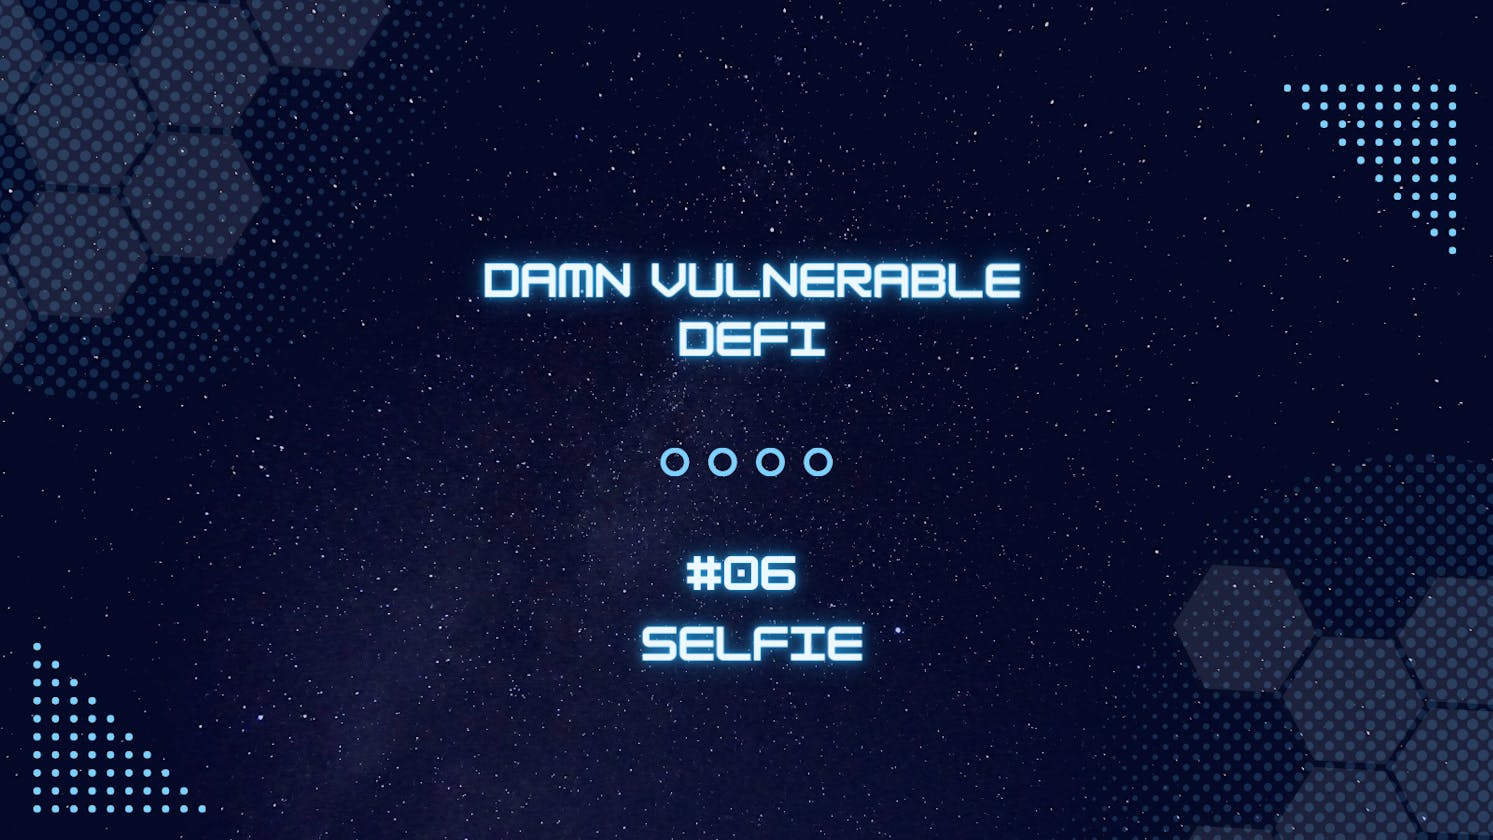 Selfie - Damn Vulnerable DeFi #06